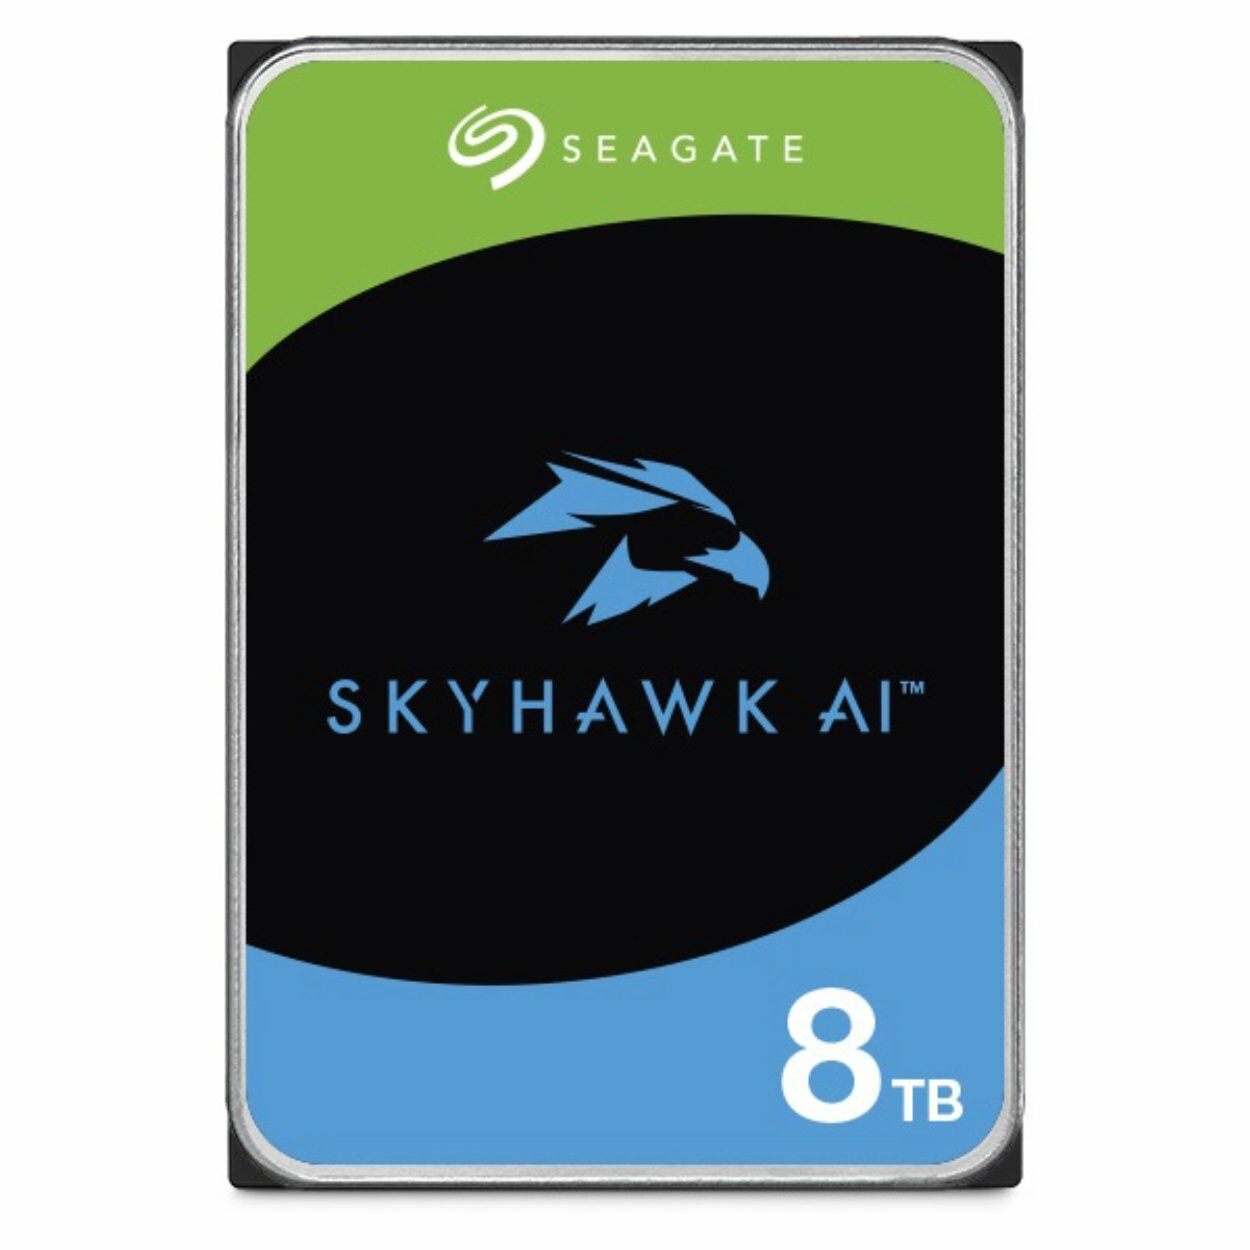 Seagate Skyhawk Al 8TB 7200RPM 256MB ST8000VE001 3.5 SATA 3.0 Harddisk